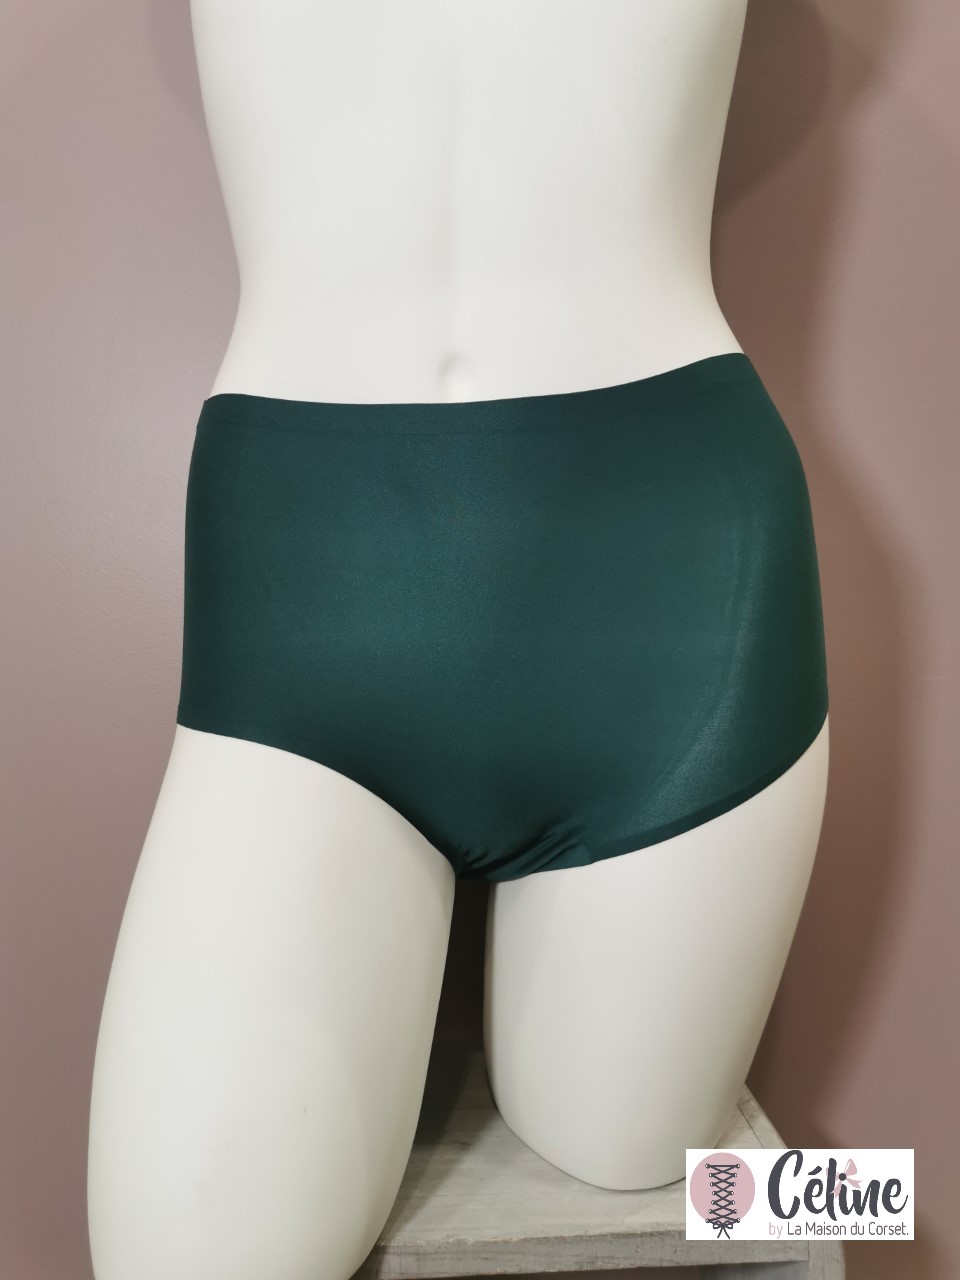 Culotte taille haute femme 24/7 Lace ELLE - Vert - Kiabi - 12.53€